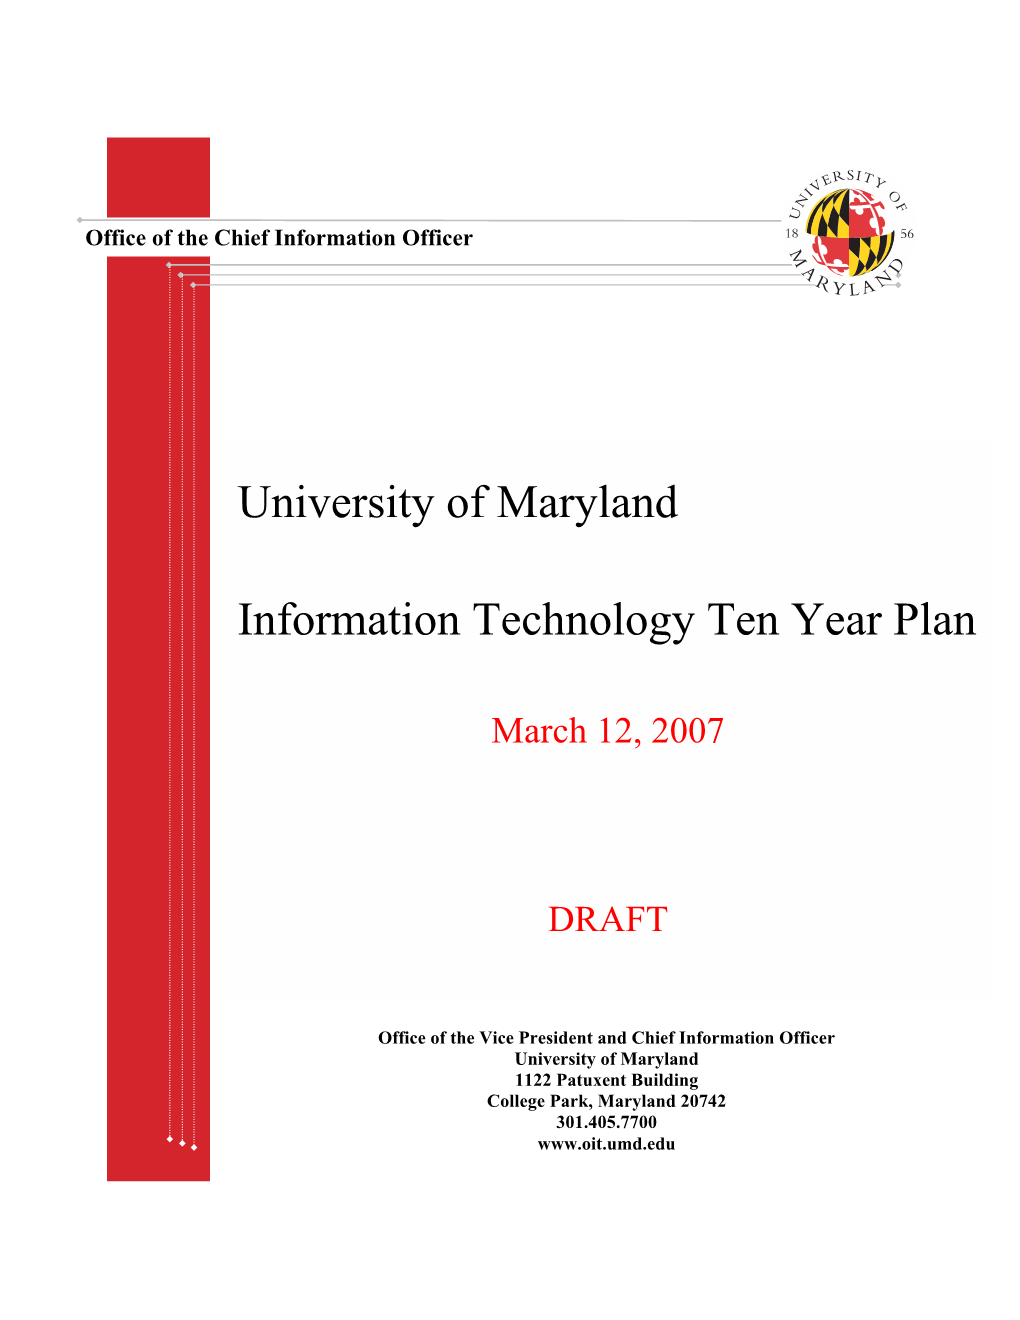 University of Maryland Information Technology Ten Year Plan